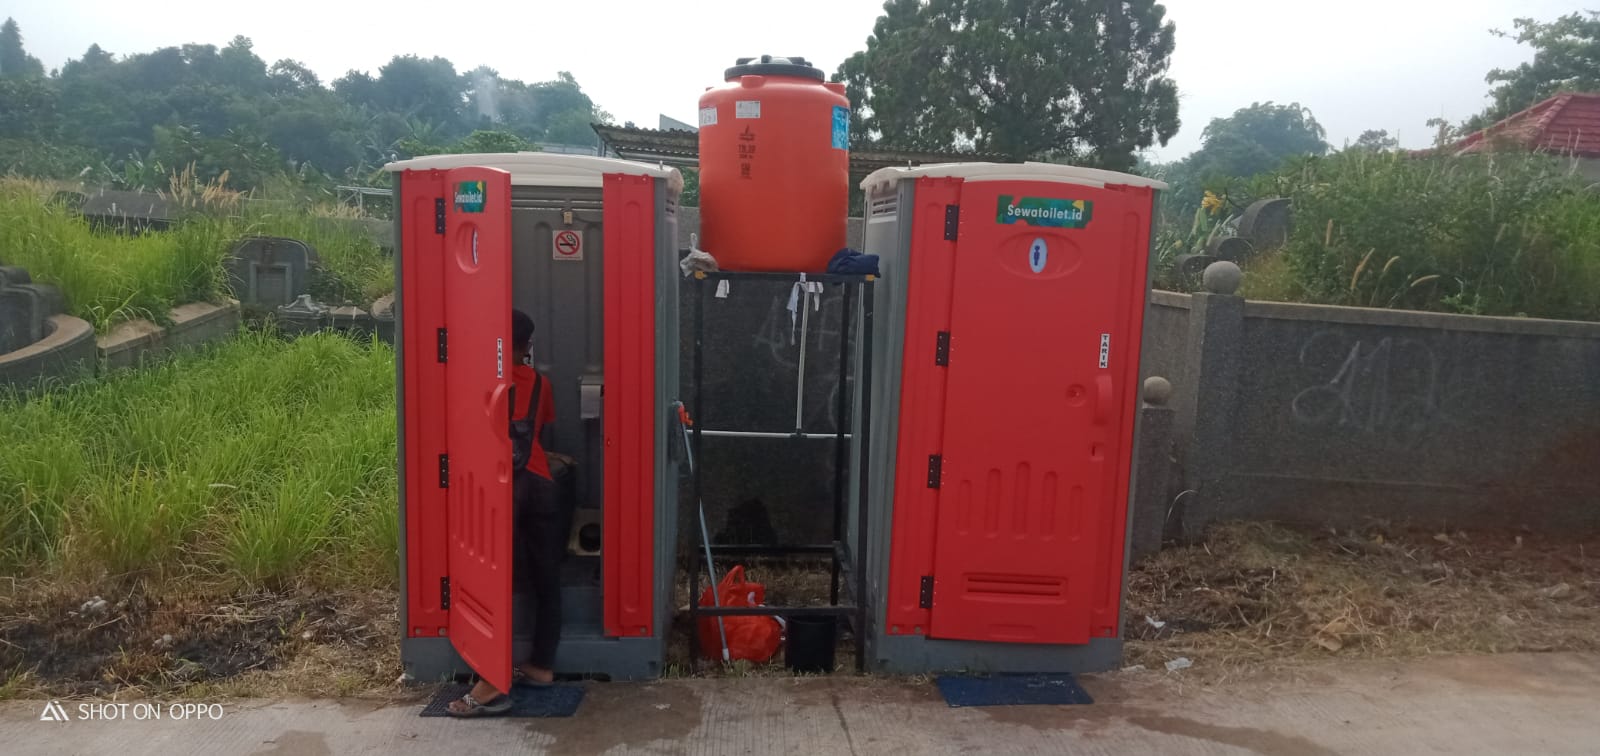 Sewa Toilet Portable Bandung Jasa Murah Kualitas Terbaik Terlengkap